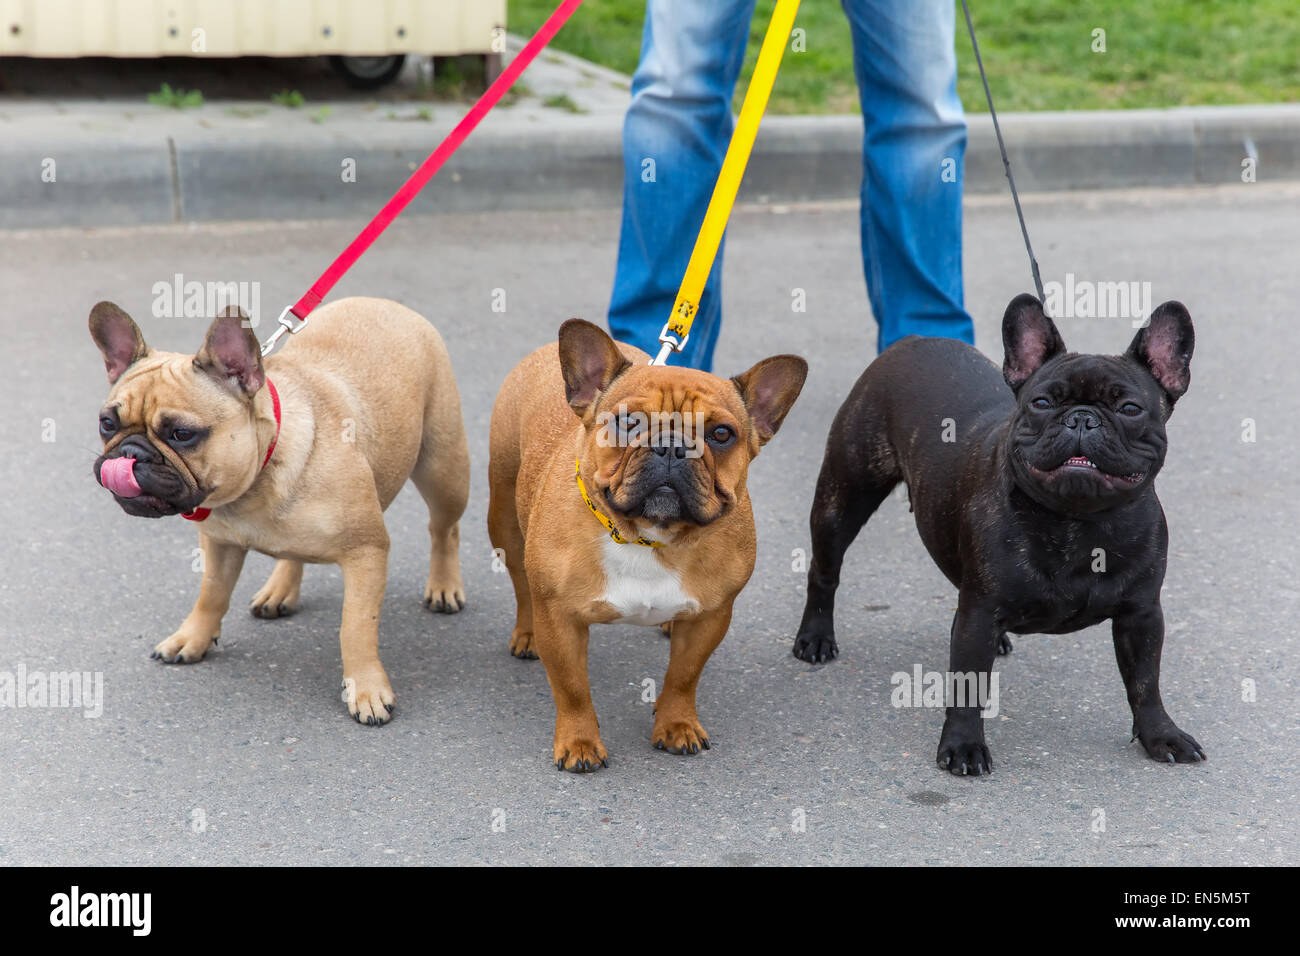 three domestic dogs French Bulldog breed Stock Photo